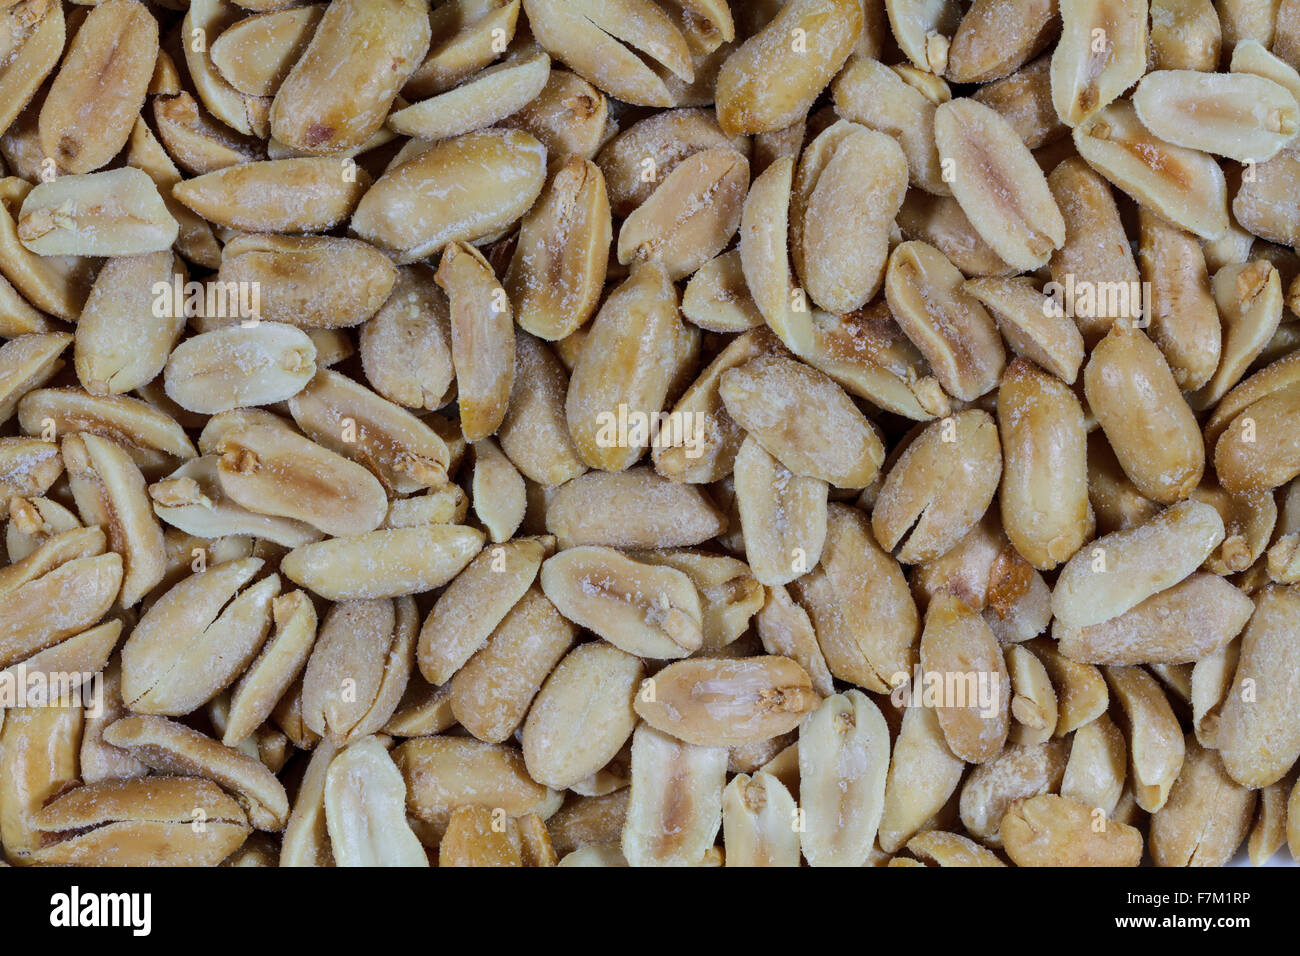 Close up of peanuts Stock Photo